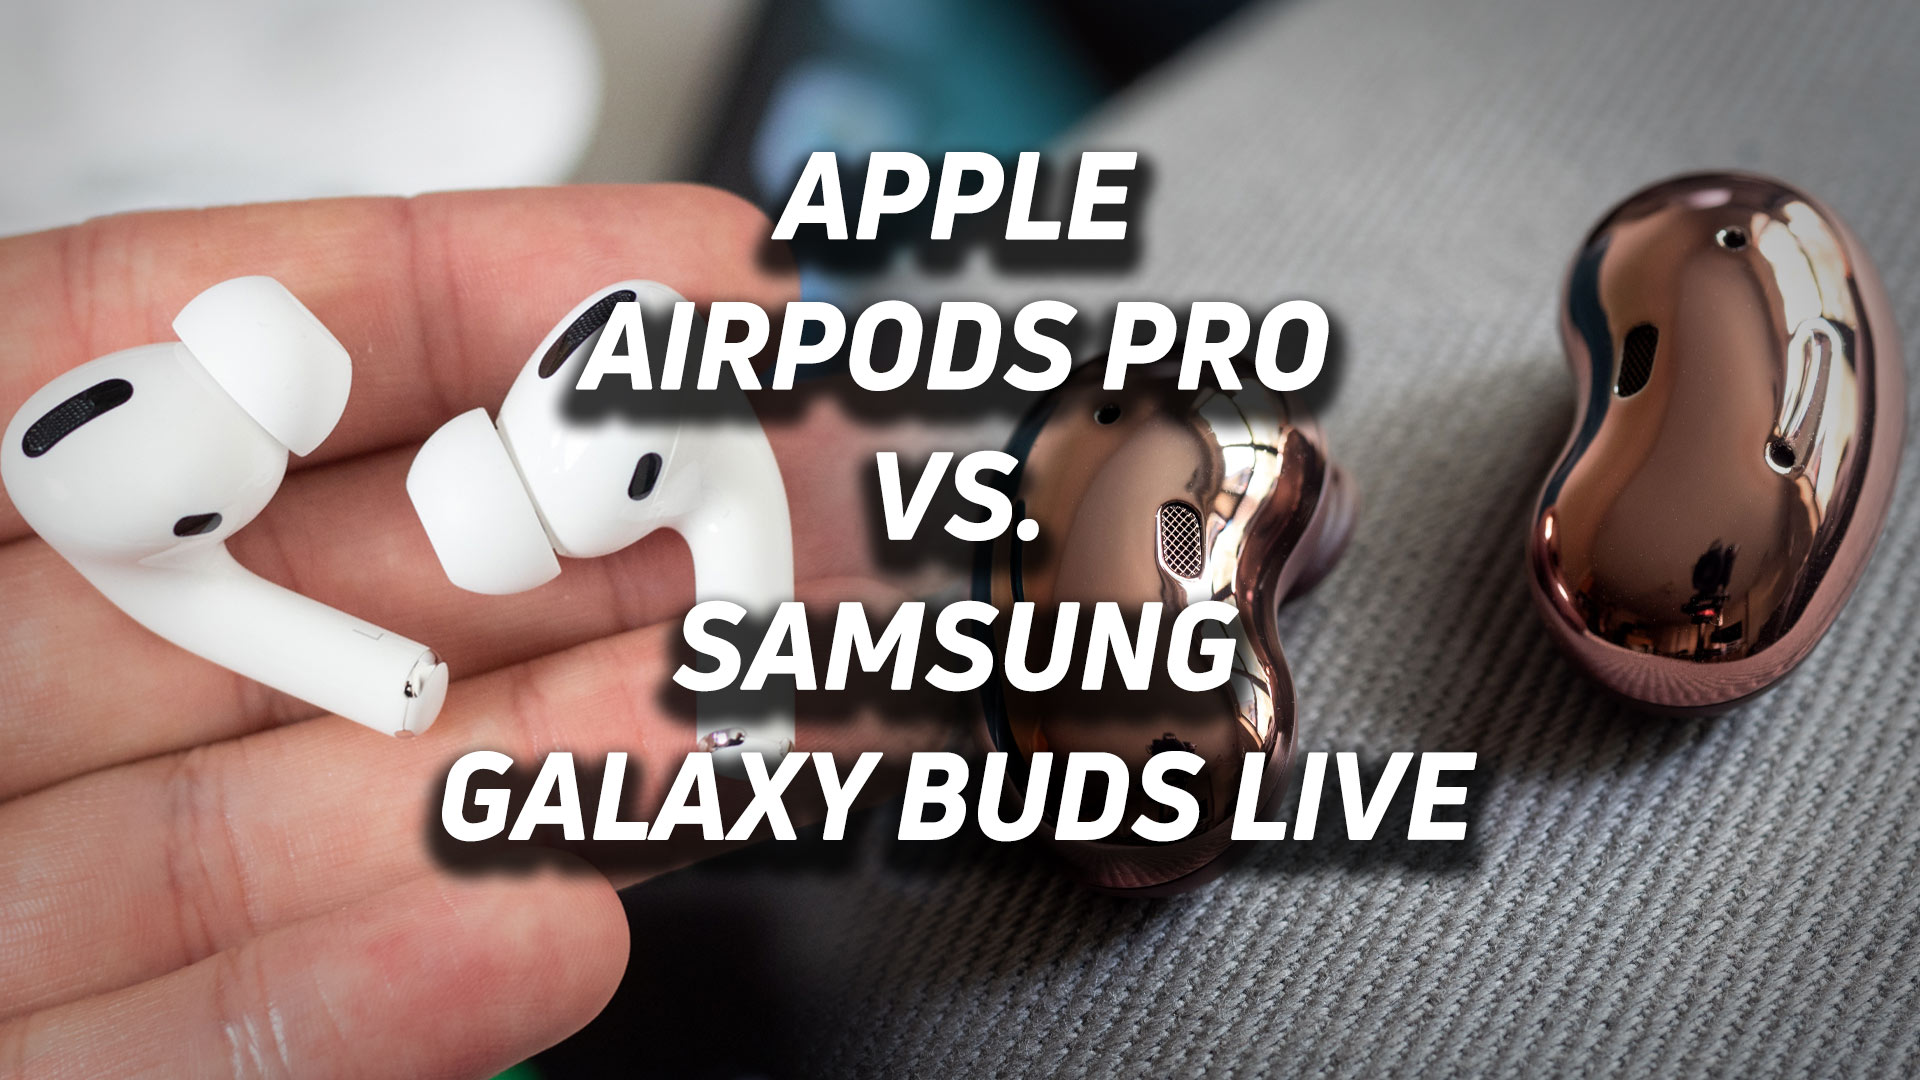 Samsung Galaxy Buds vs. Apple AirPods (2nd generation) - SoundGuys